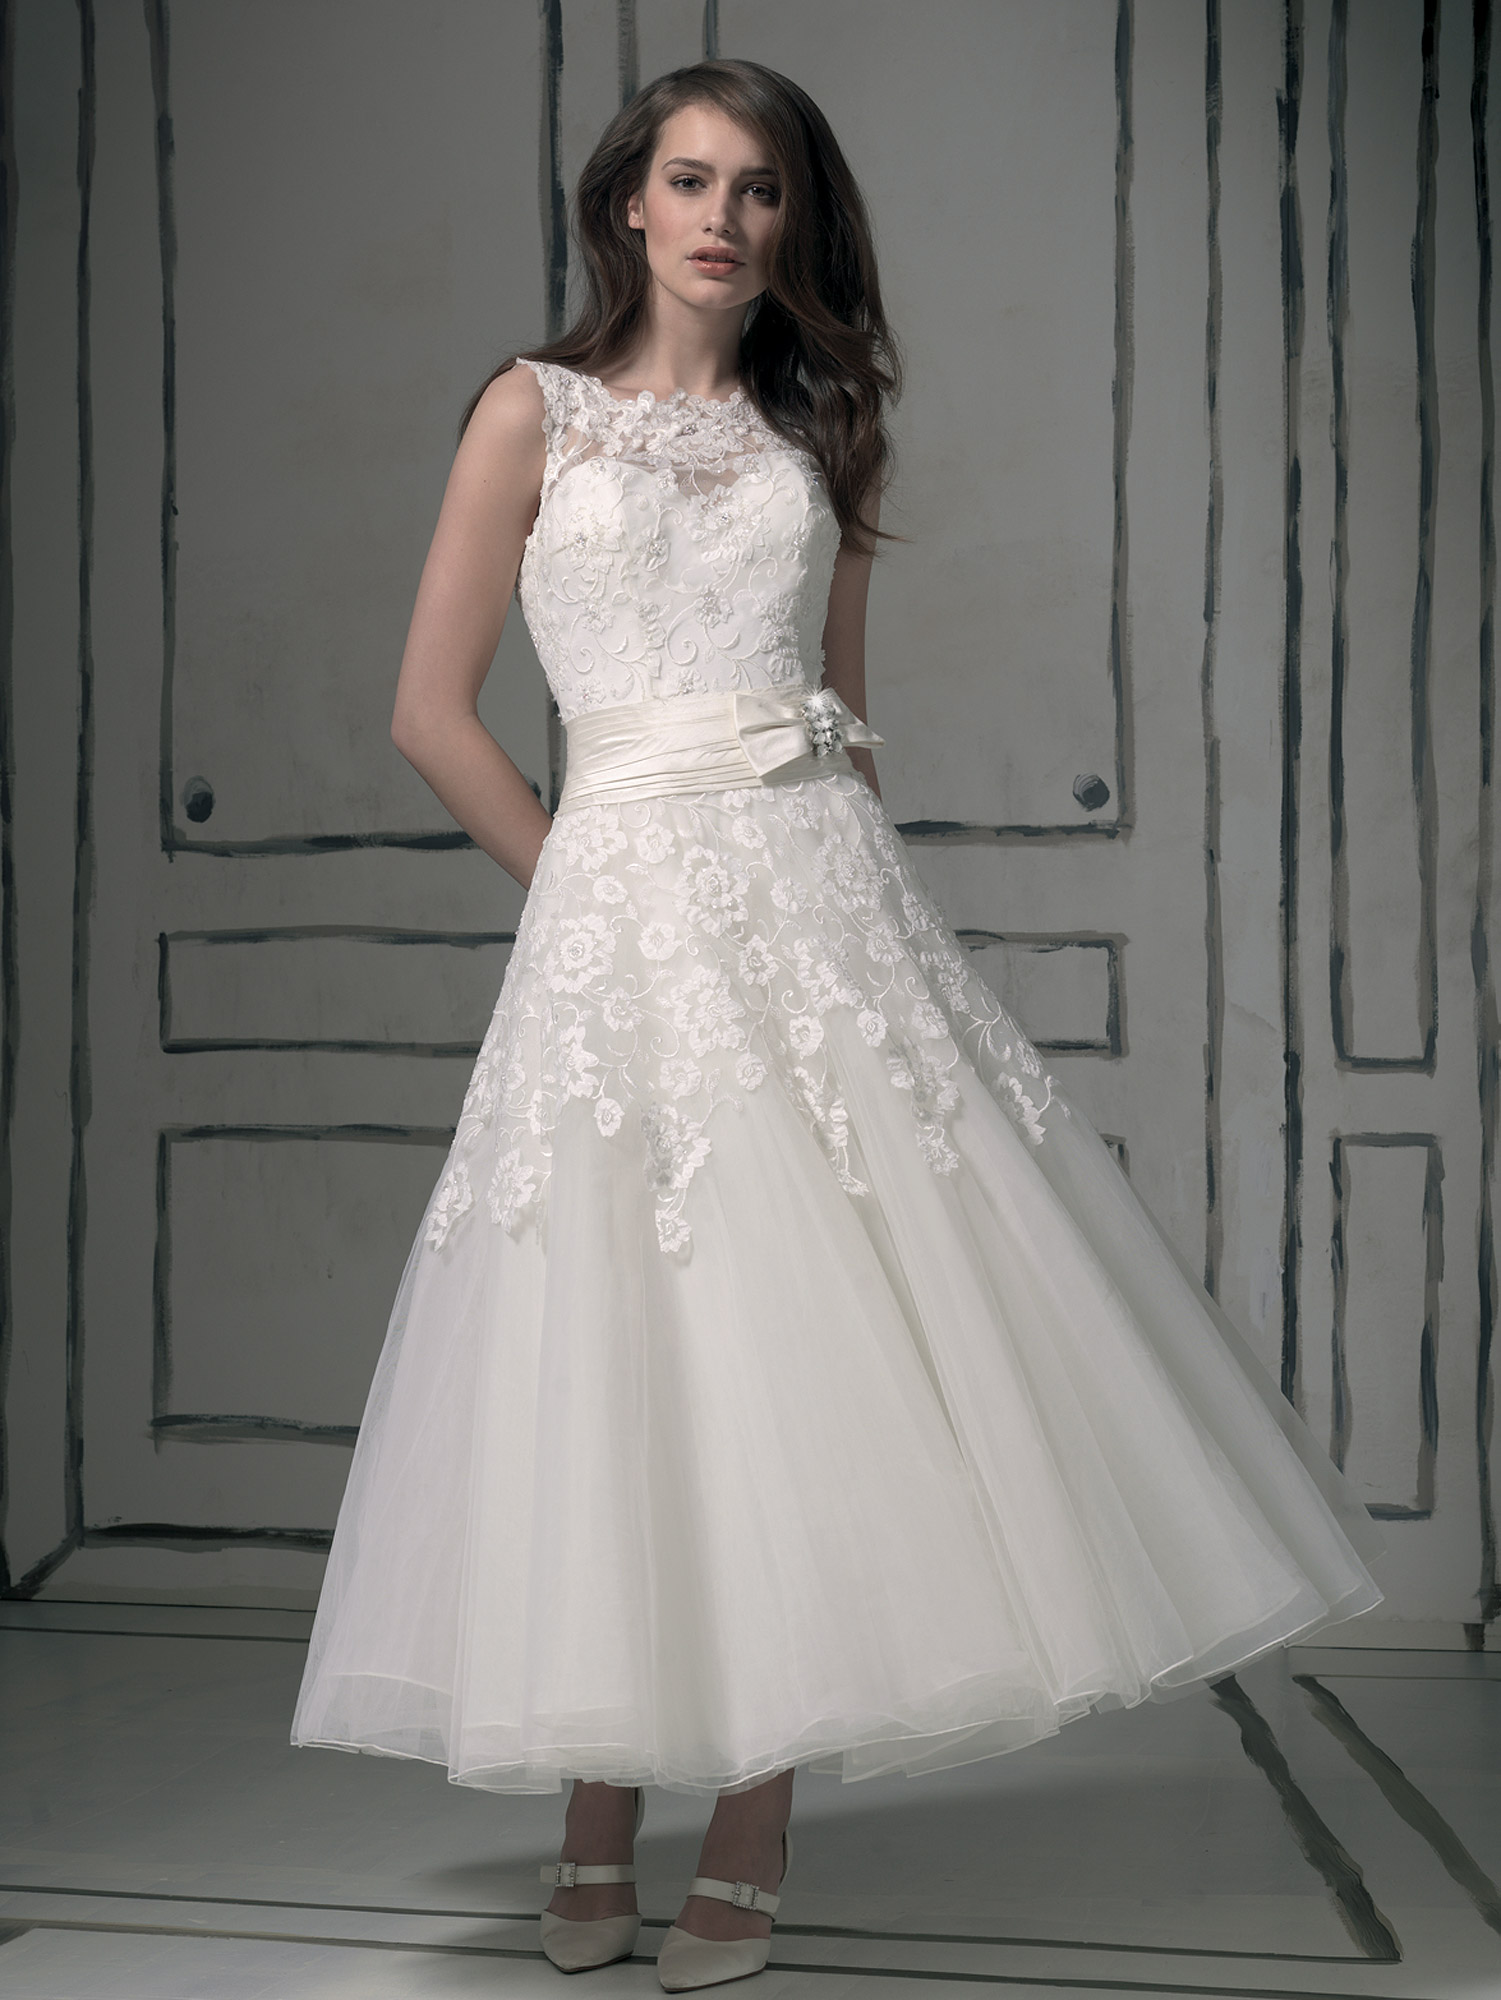 Justin Alexander Tea Length Embroidered Wedding Dress Design 8555